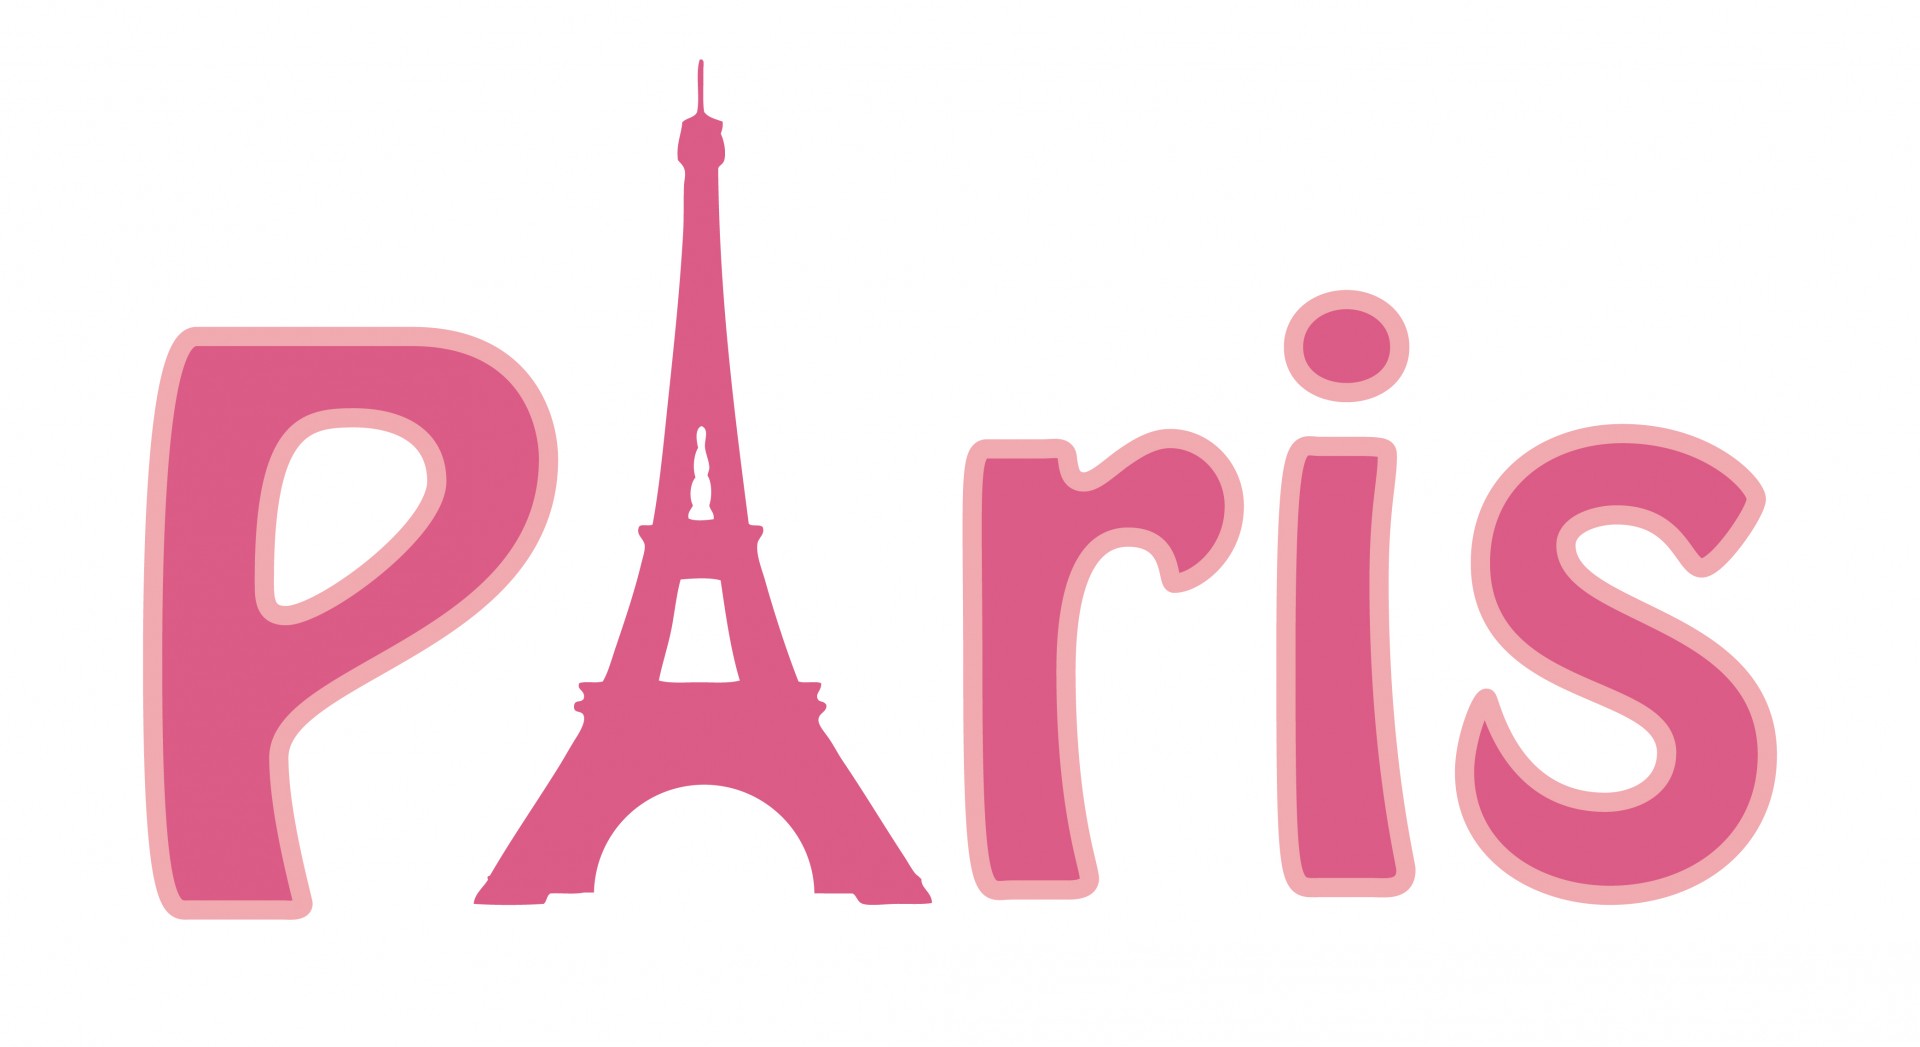 Eiffel tower silhouette clipart free stock photo public domain 2